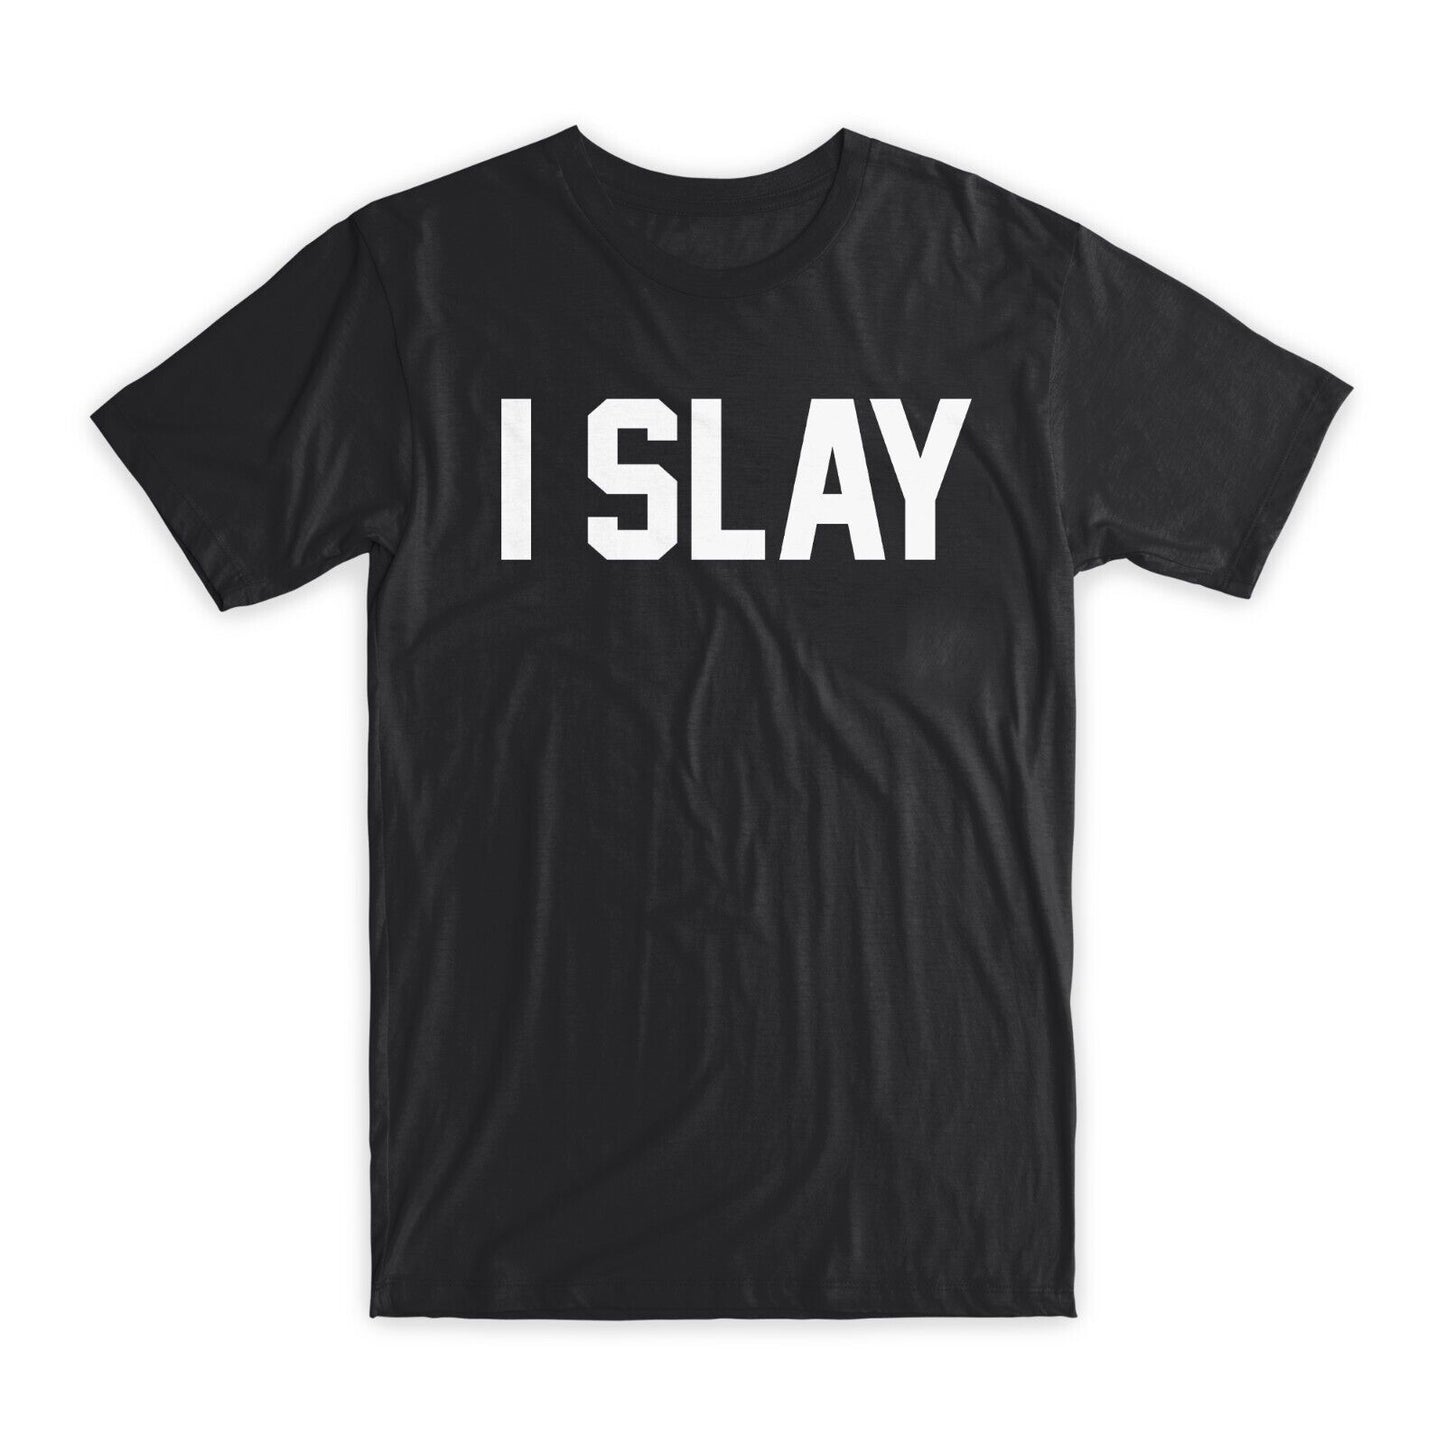 I Slay Printed T-Shirt Premium Soft Cotton Crew Neck Funny Tees Novelty Gift NEW